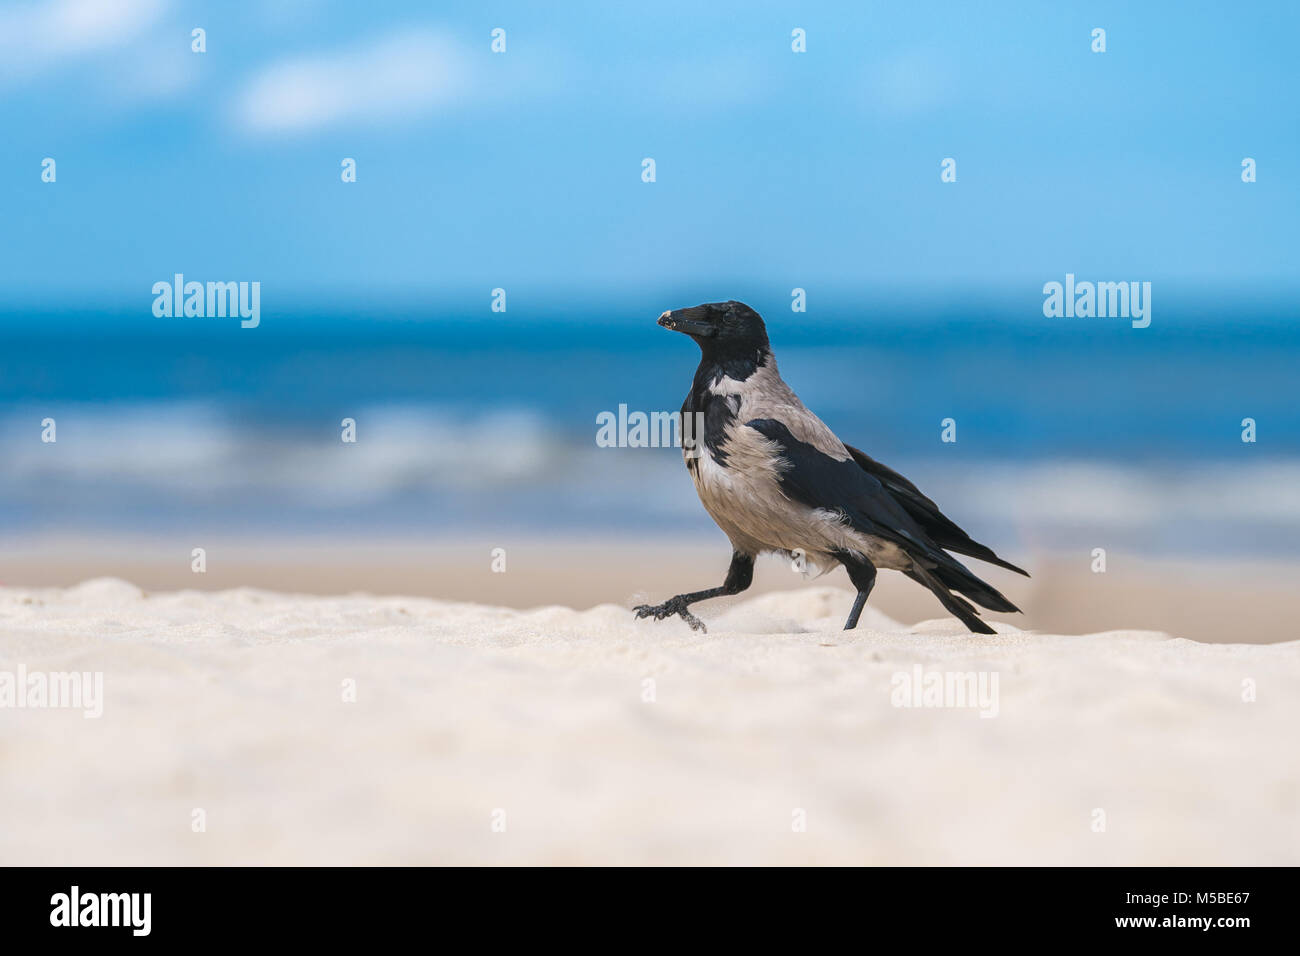 A fog crow walks on a sandy beach in front of blue sky. Stock Photo